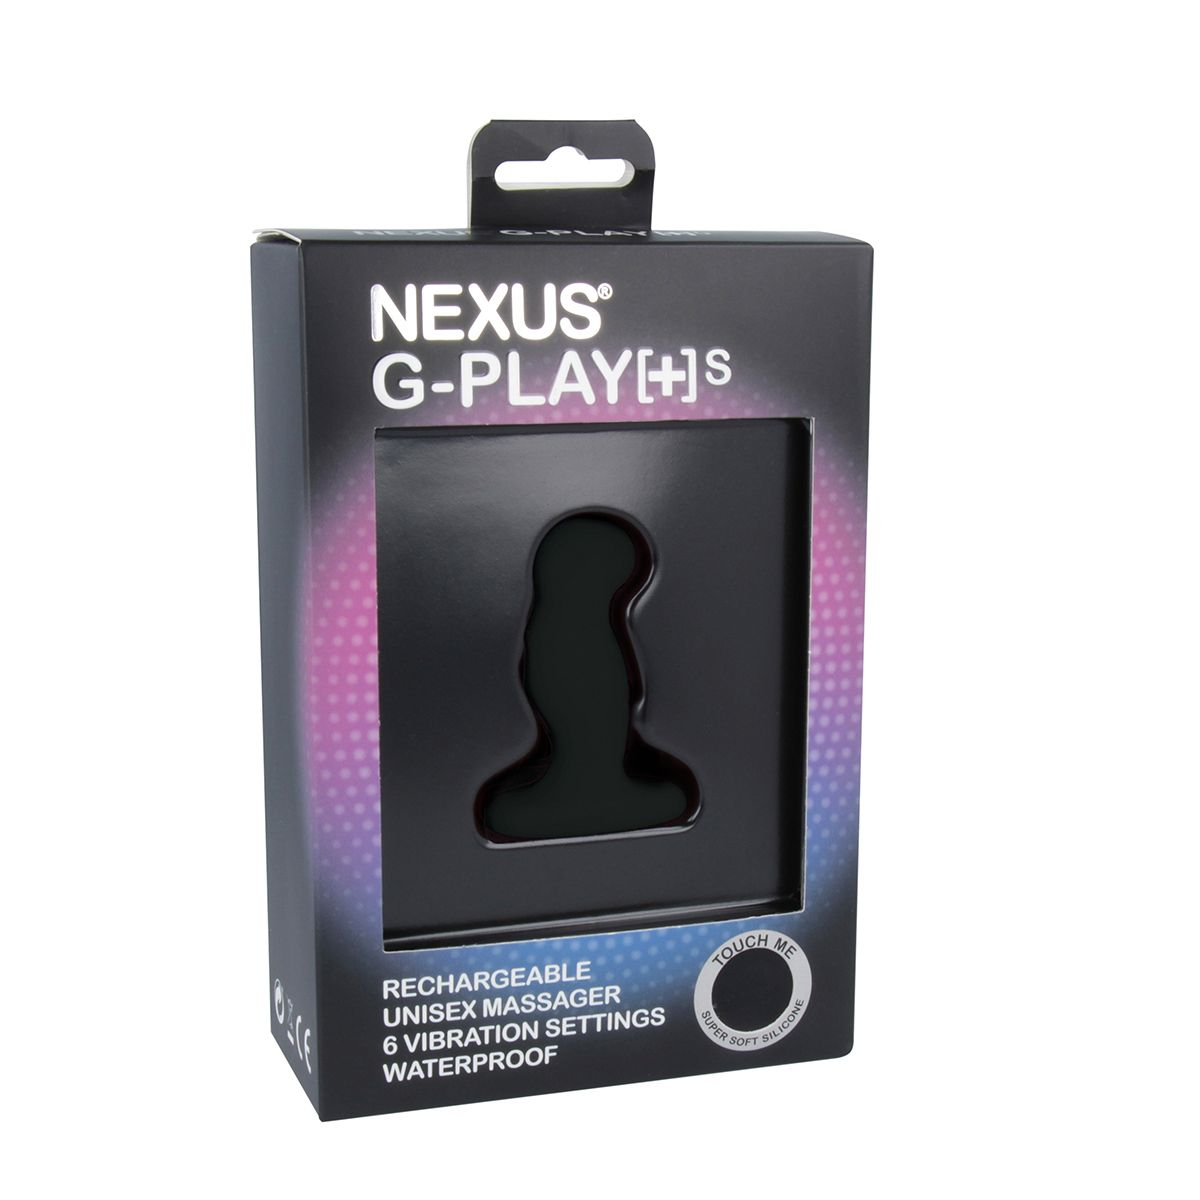 Klein G-Play+ Unisex Vibrator NEXUS - g-punkt-vibratoren